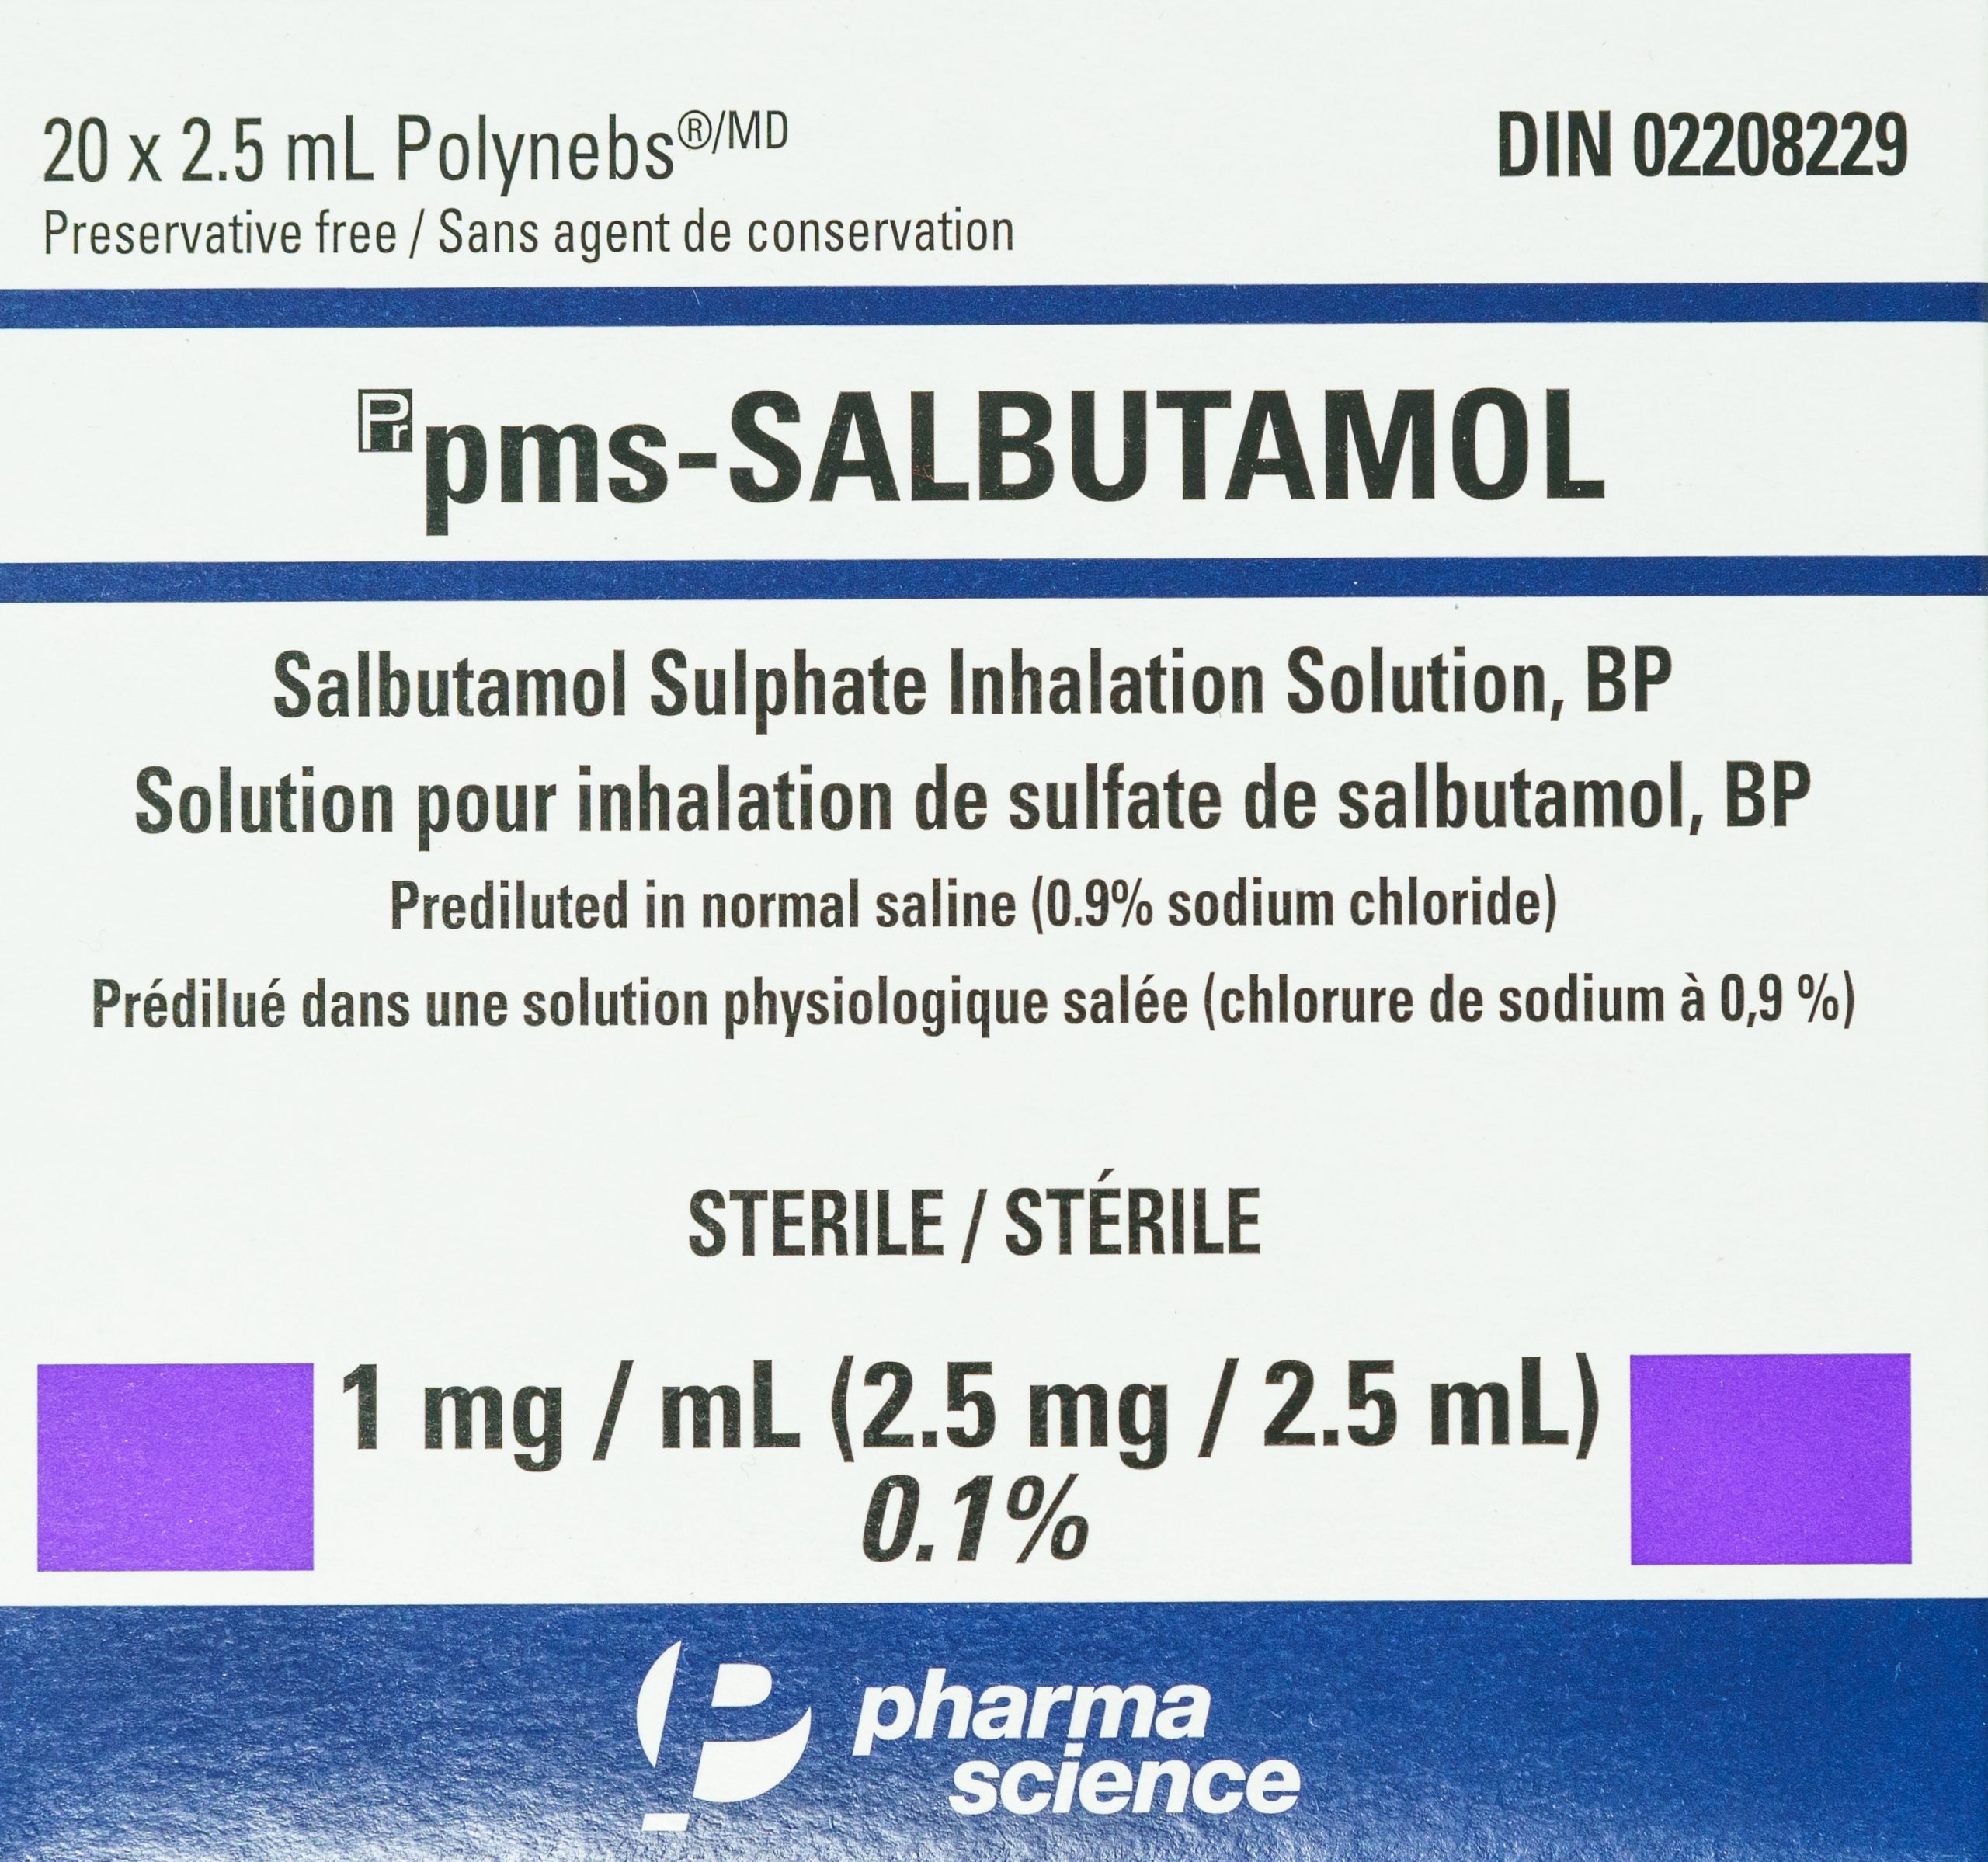 Packaging for pms-Salbutamol. 20 times 2.5mL Polynebs. 2.5 mg/2.5 mL.